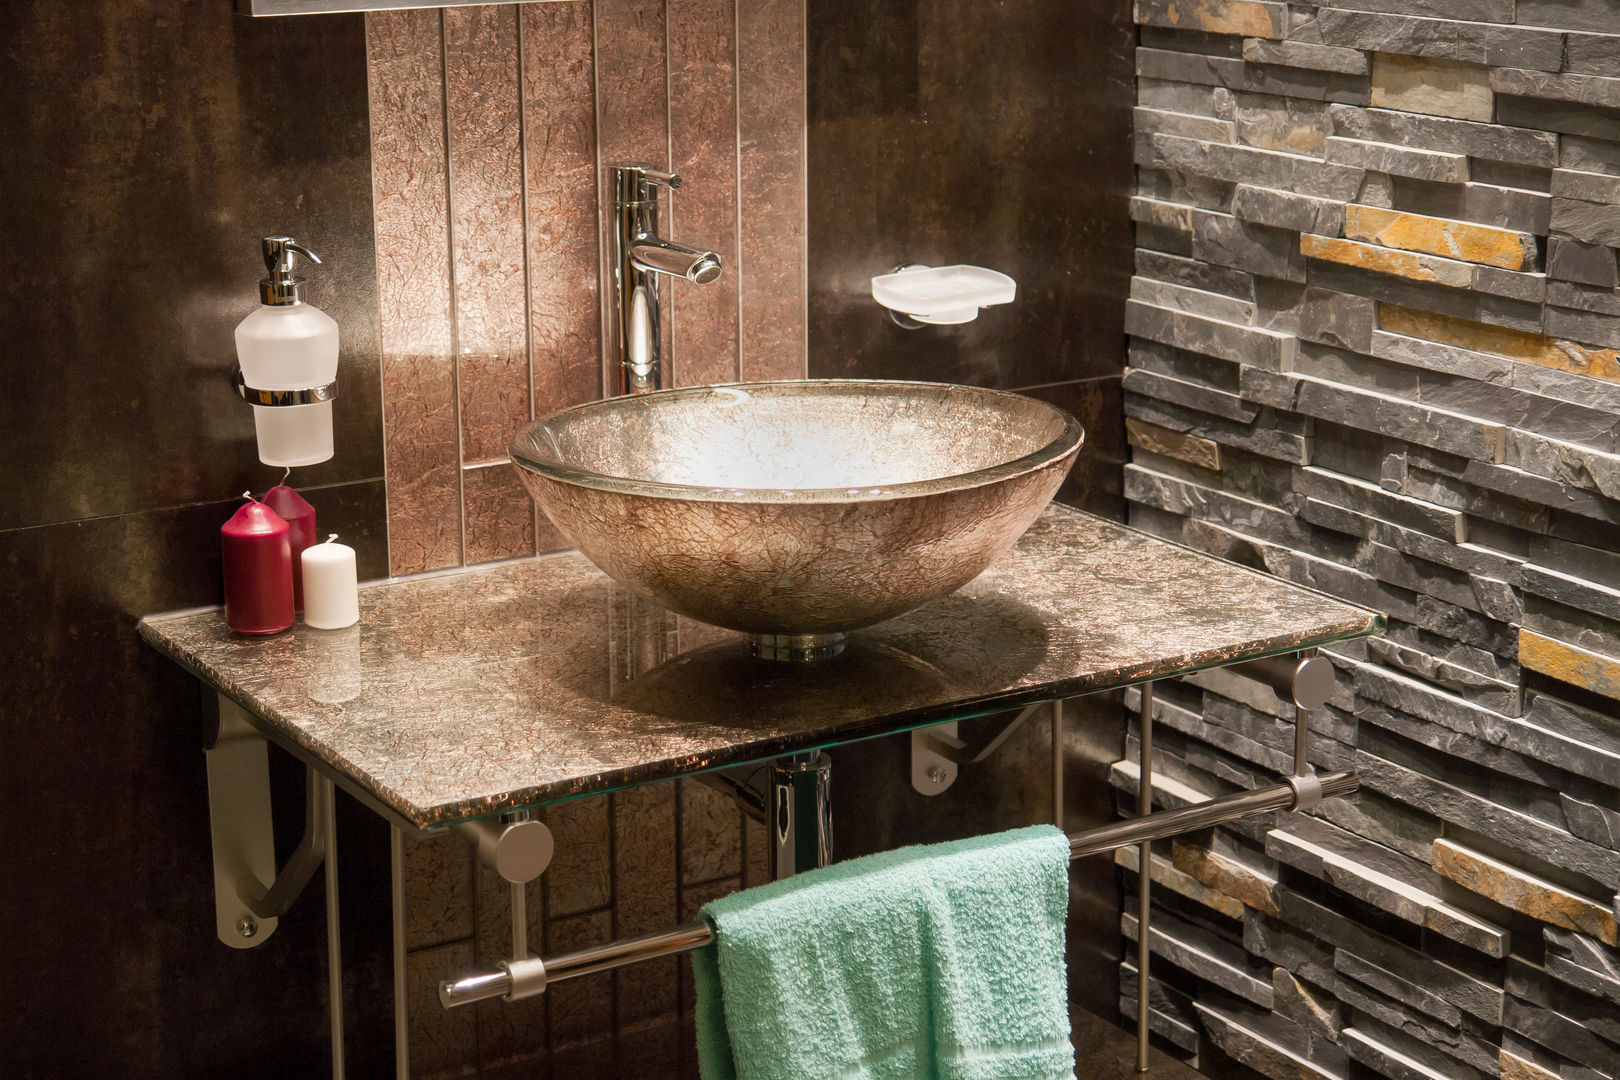 Exposed Brick, Statement Sink Gracious Luxury Interiors Industrial style bathrooms